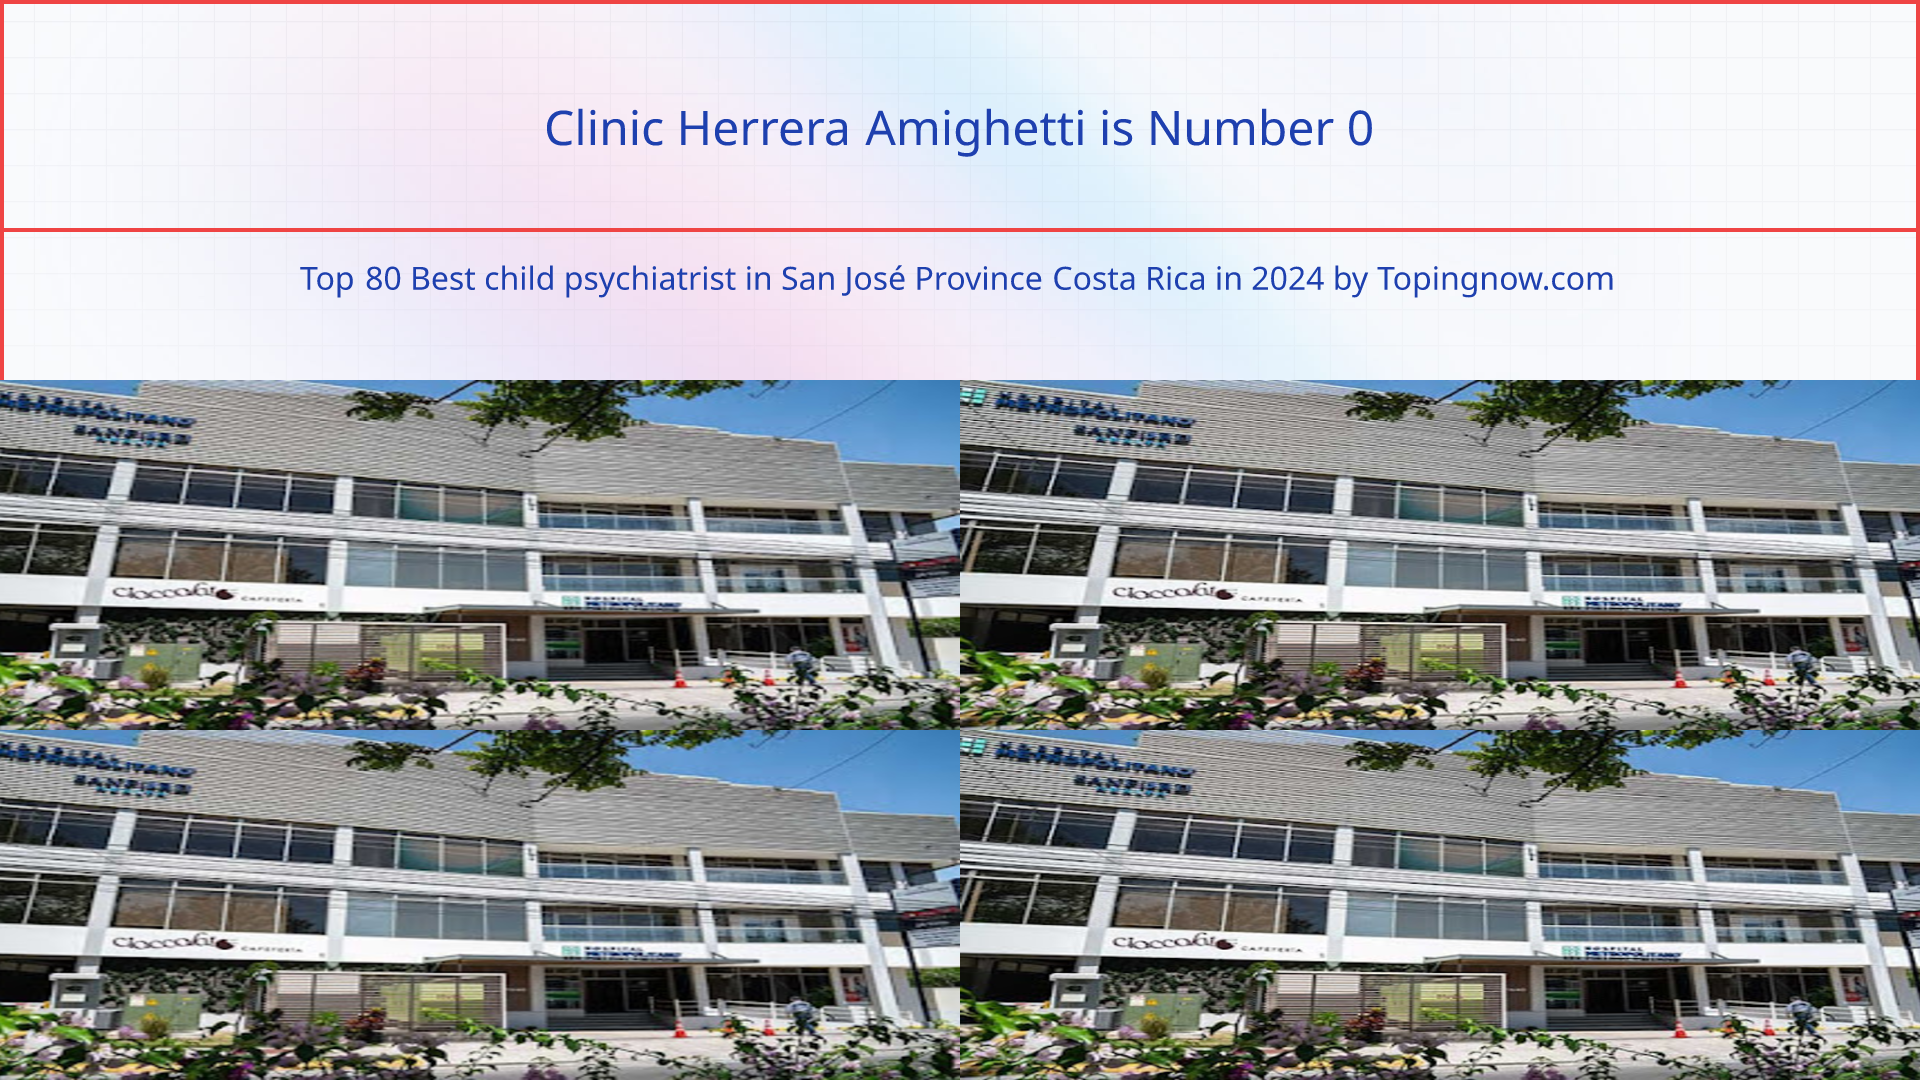 Clinic Herrera Amighetti: Top 80 Best child psychiatrist in San José Province Costa Rica in 2024